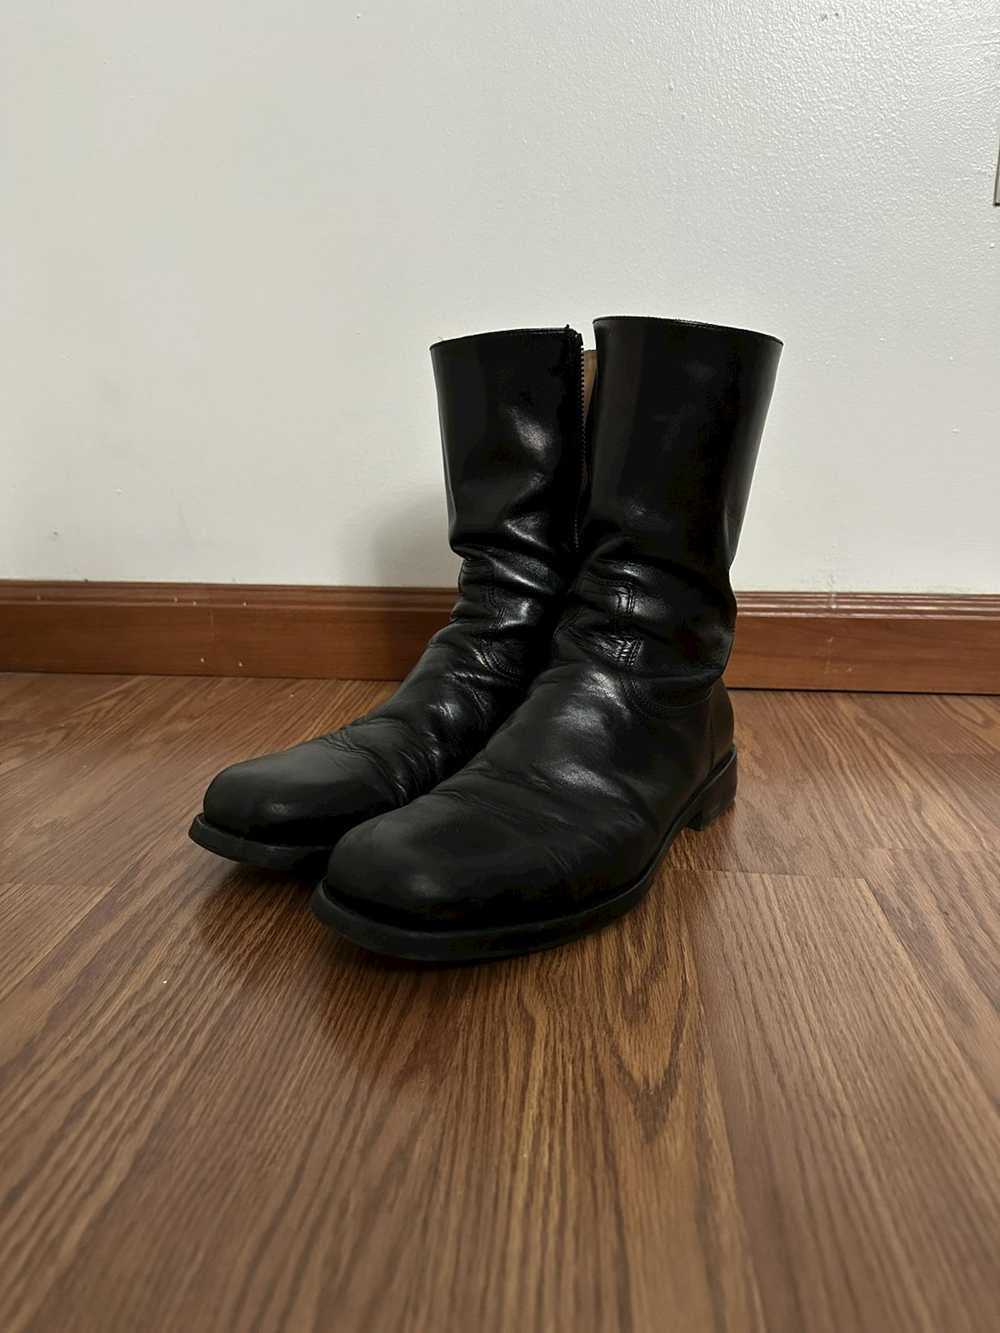 Dries Van Noten Square Toe Zipped Boots - image 1